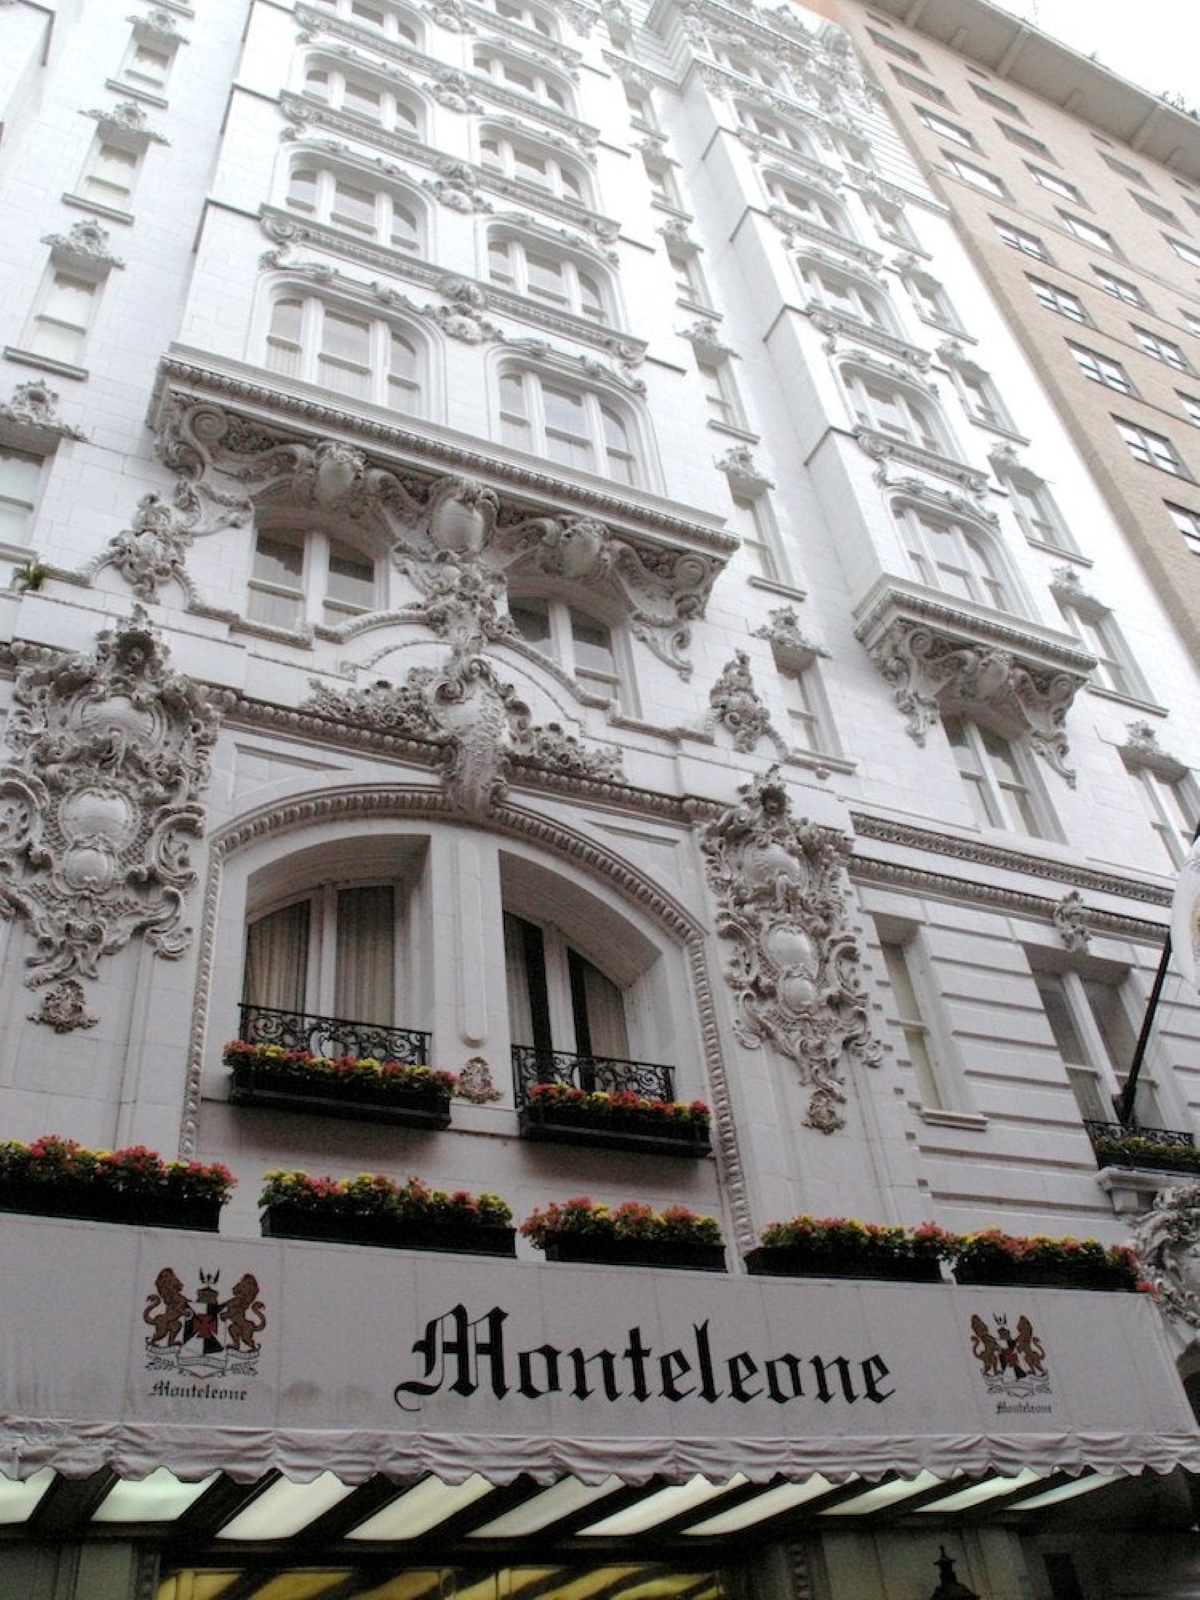 Hotel Monteleone front fascade